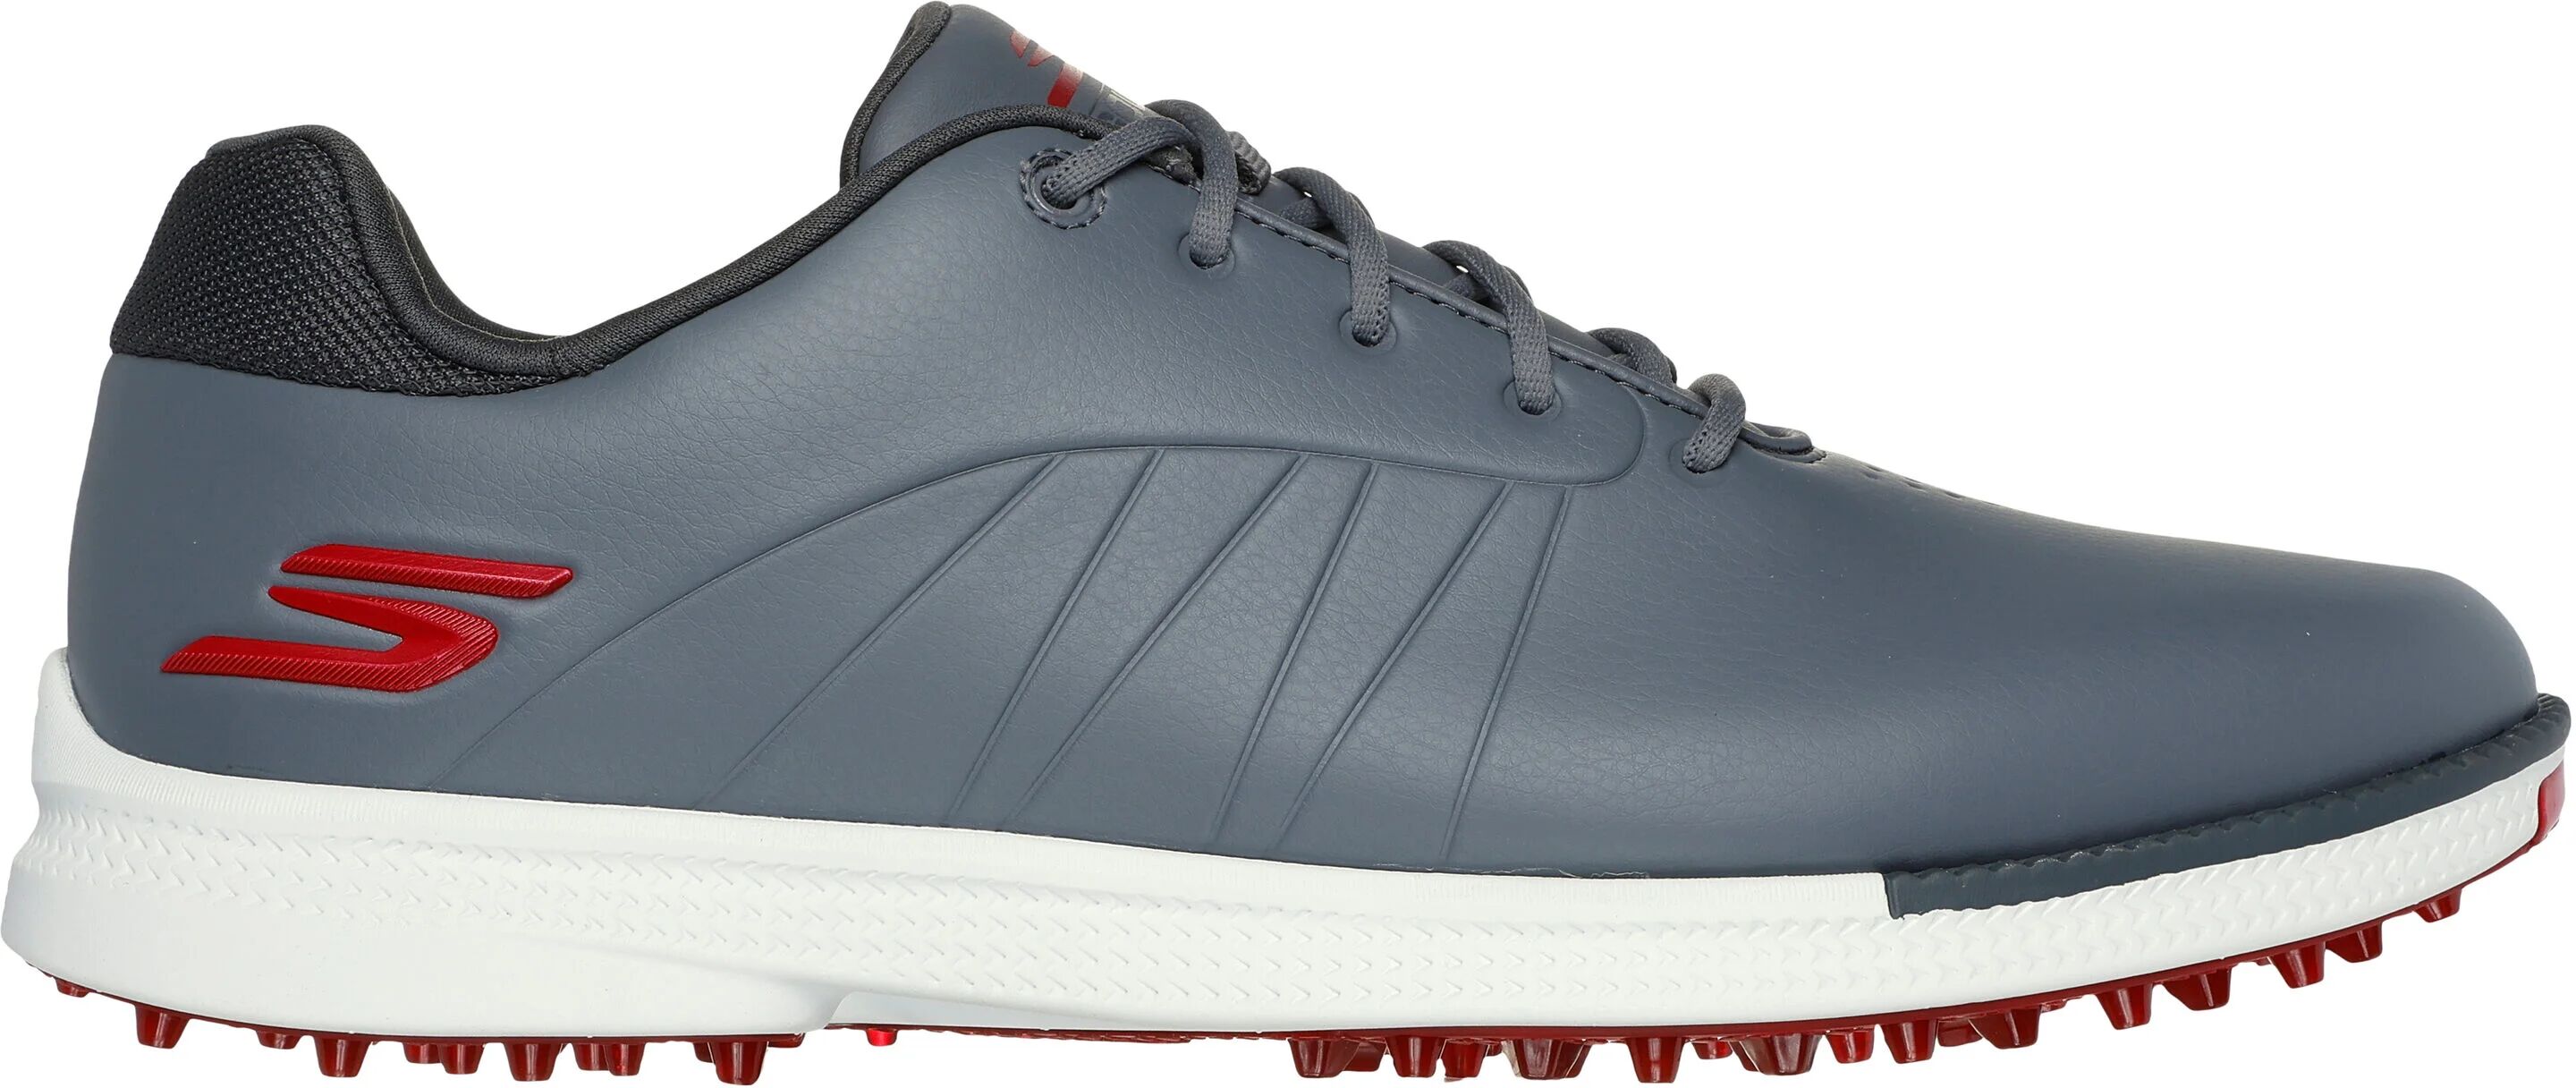 Skechers GO GOLF Tempo GF Golf Shoes - Gray/Red - 7.5 - MEDIUM